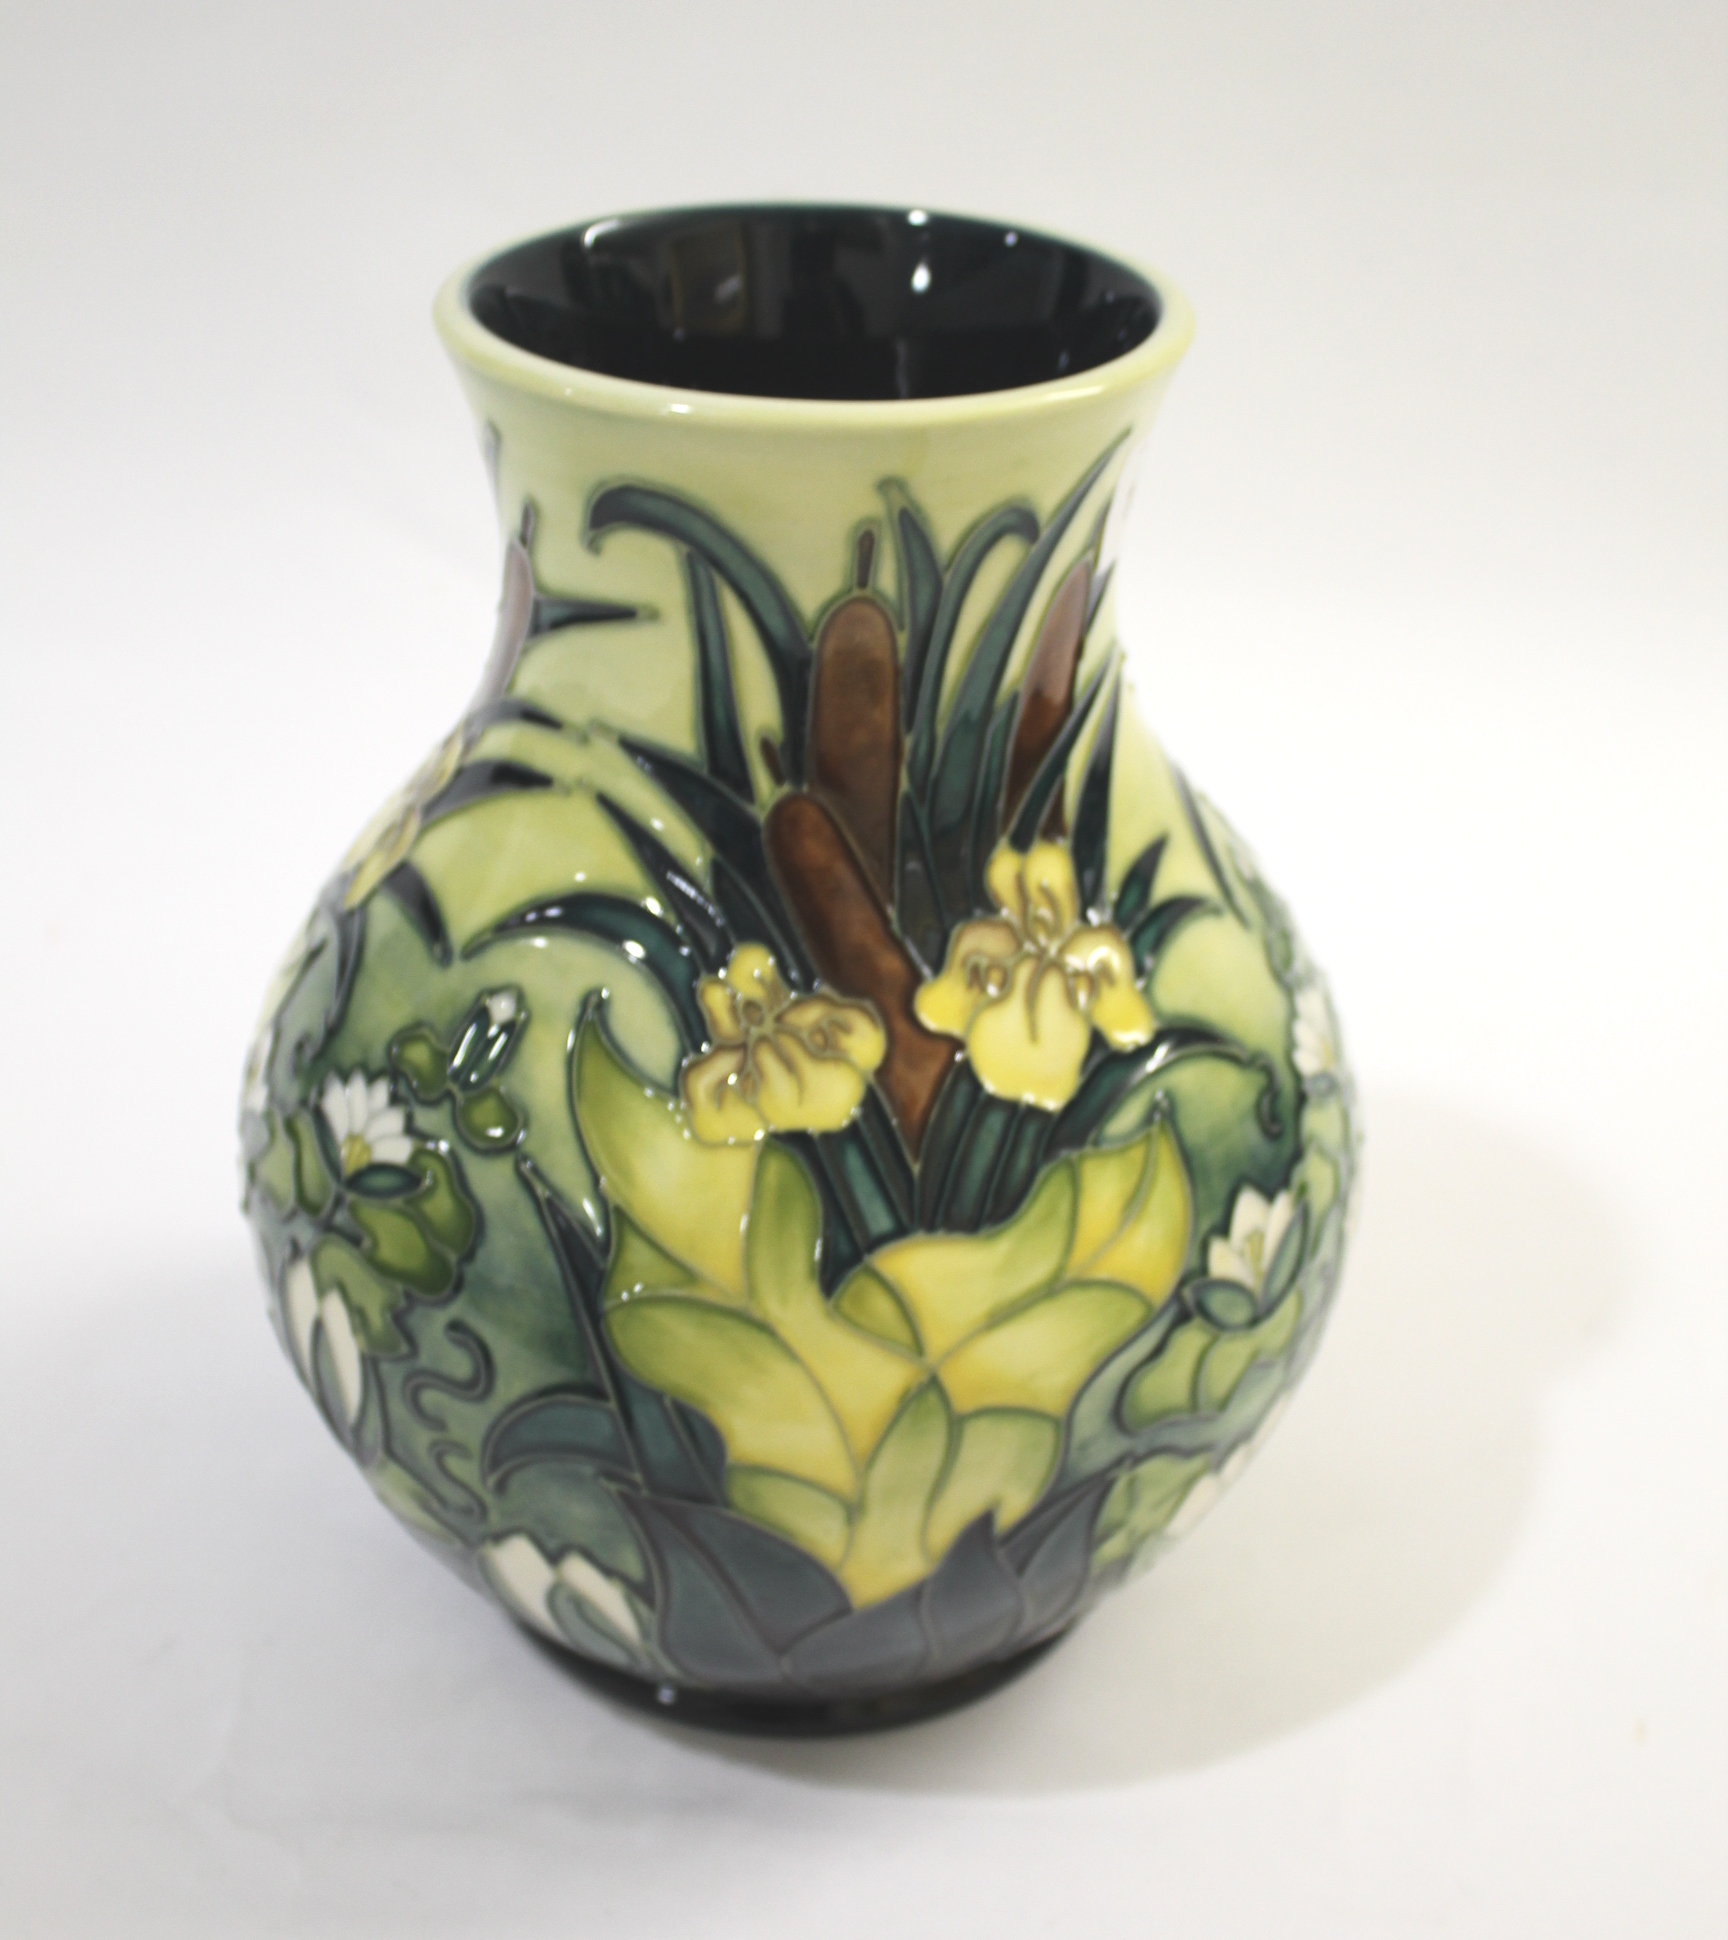 MOORCROFT VASE - LAMIA a boxed modern Moorcroft vase in the Lamia design, designed by Rachel Bishop. - Image 3 of 5